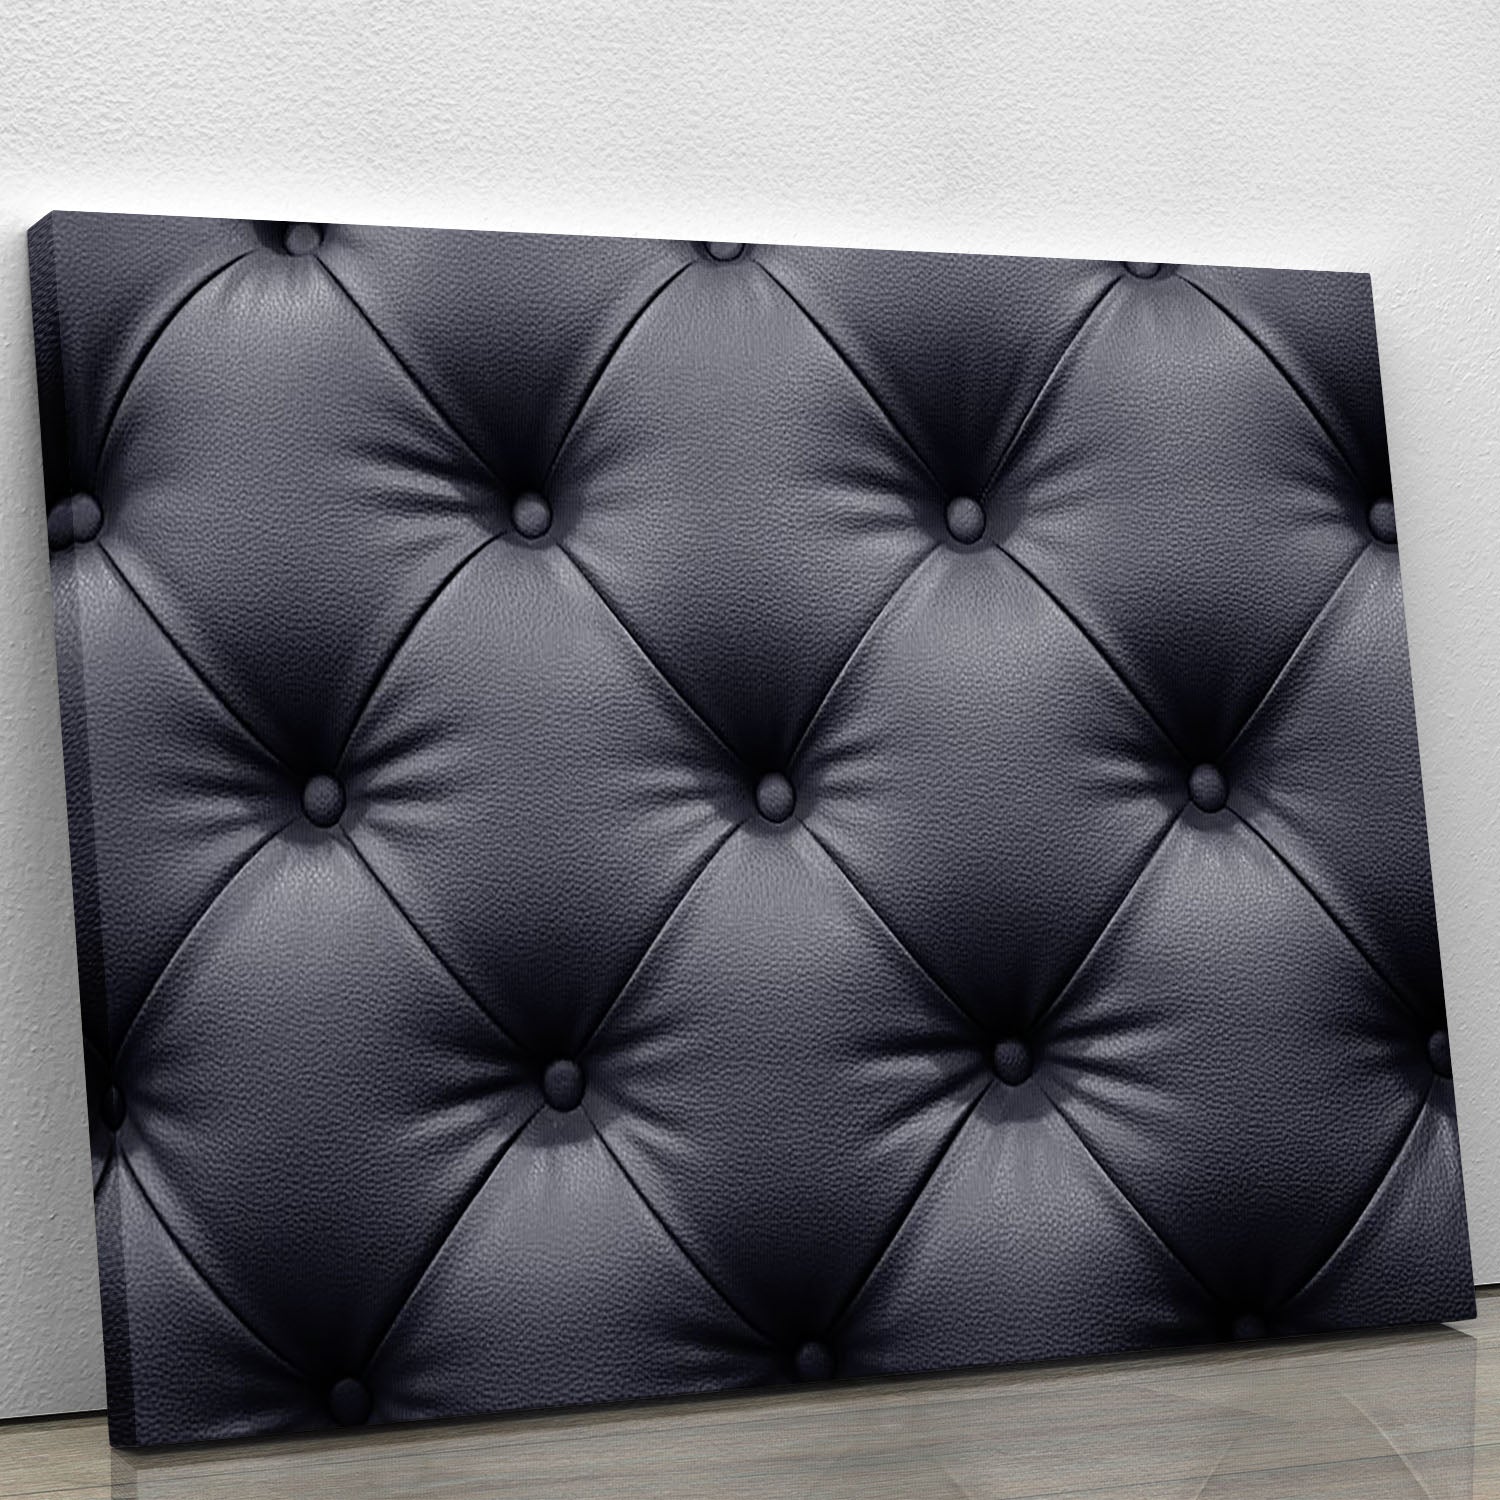 Black leather sofa texture Canvas Print or Poster - Canvas Art Rocks - 1